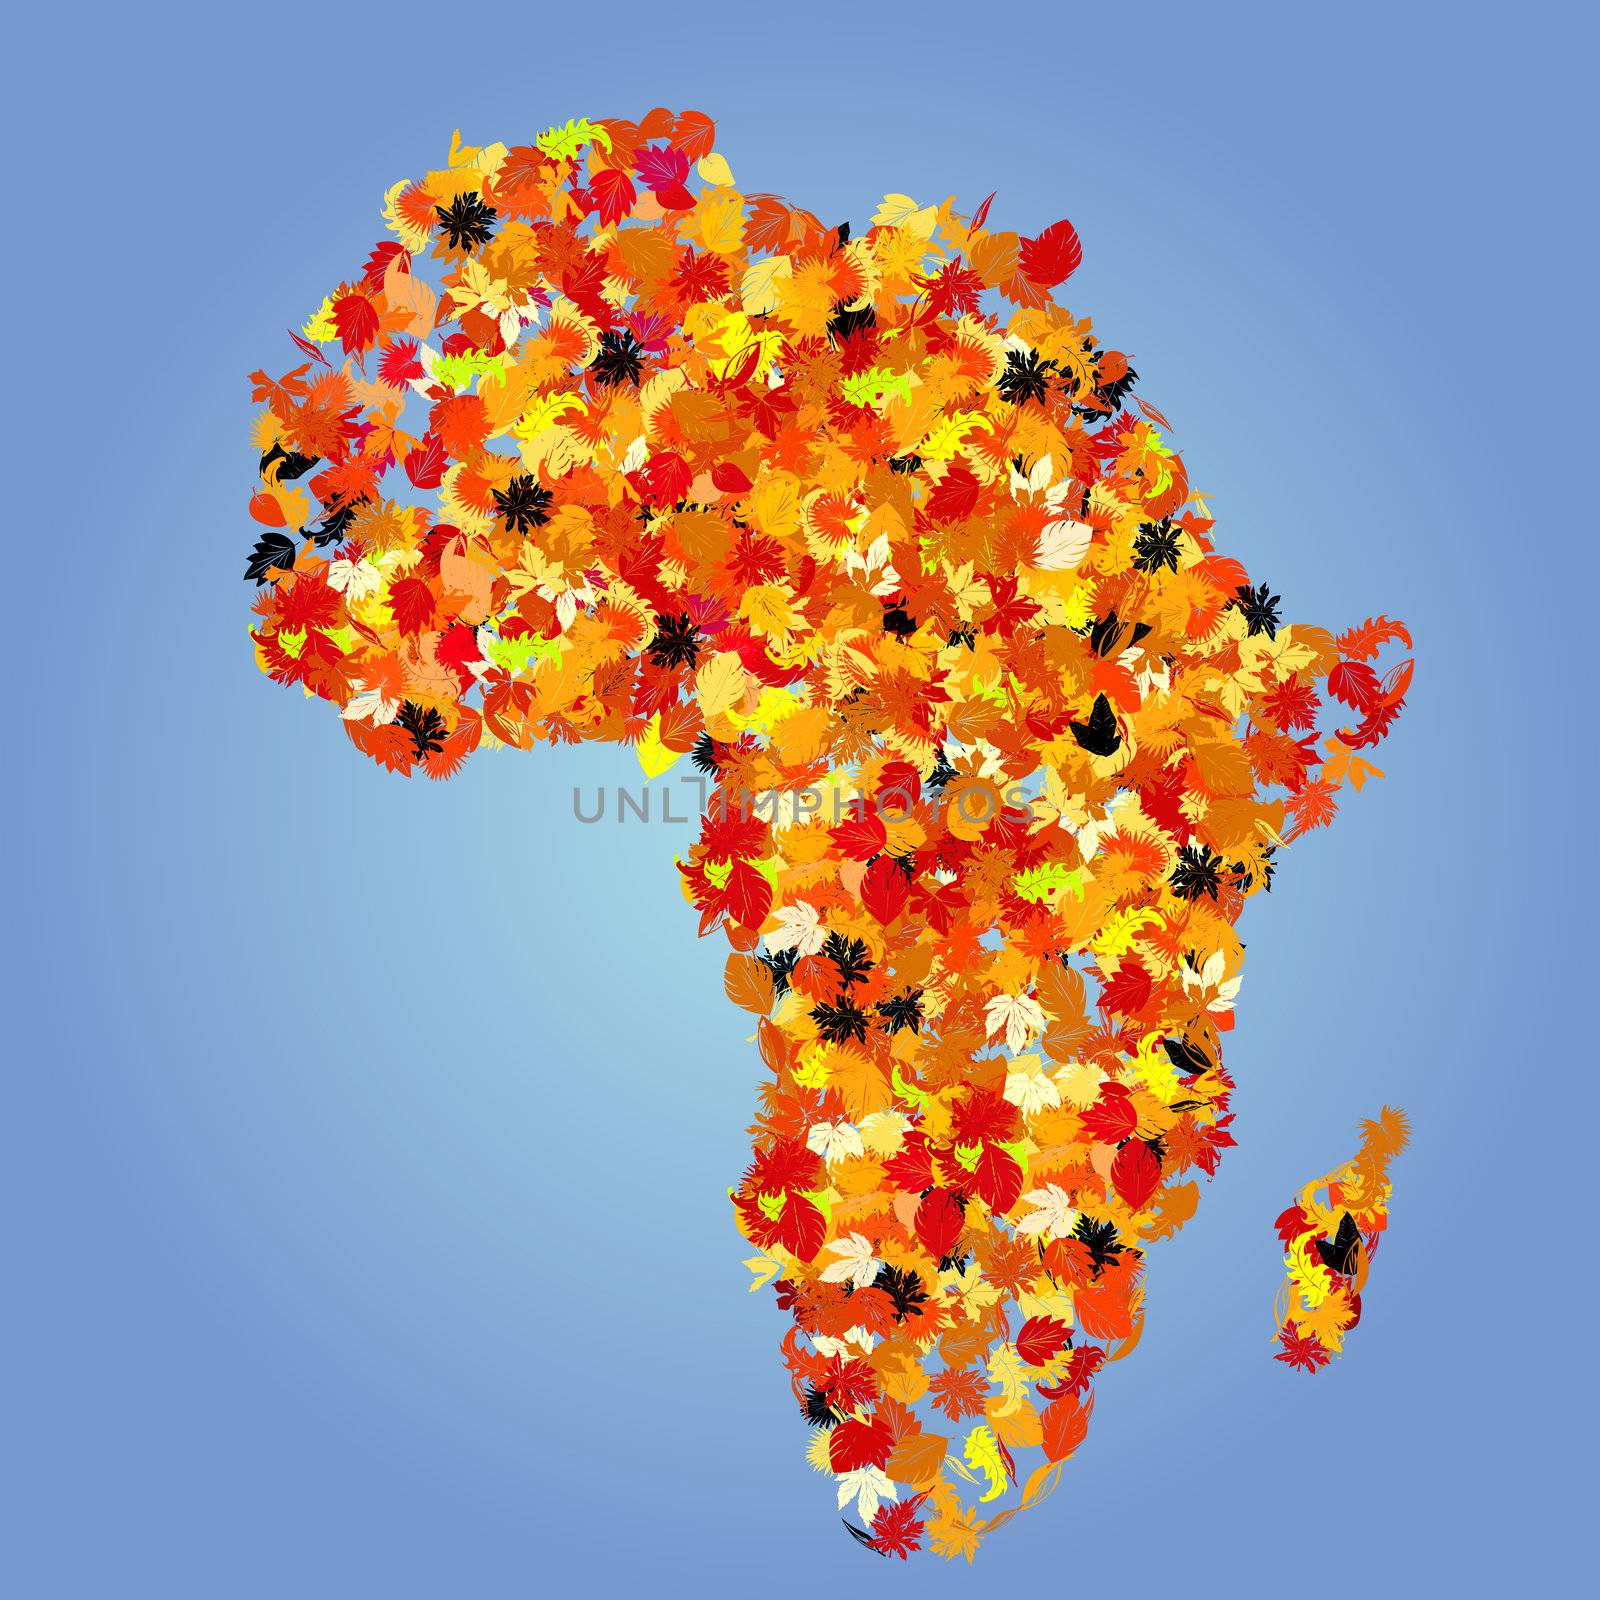 Africa by Lirch